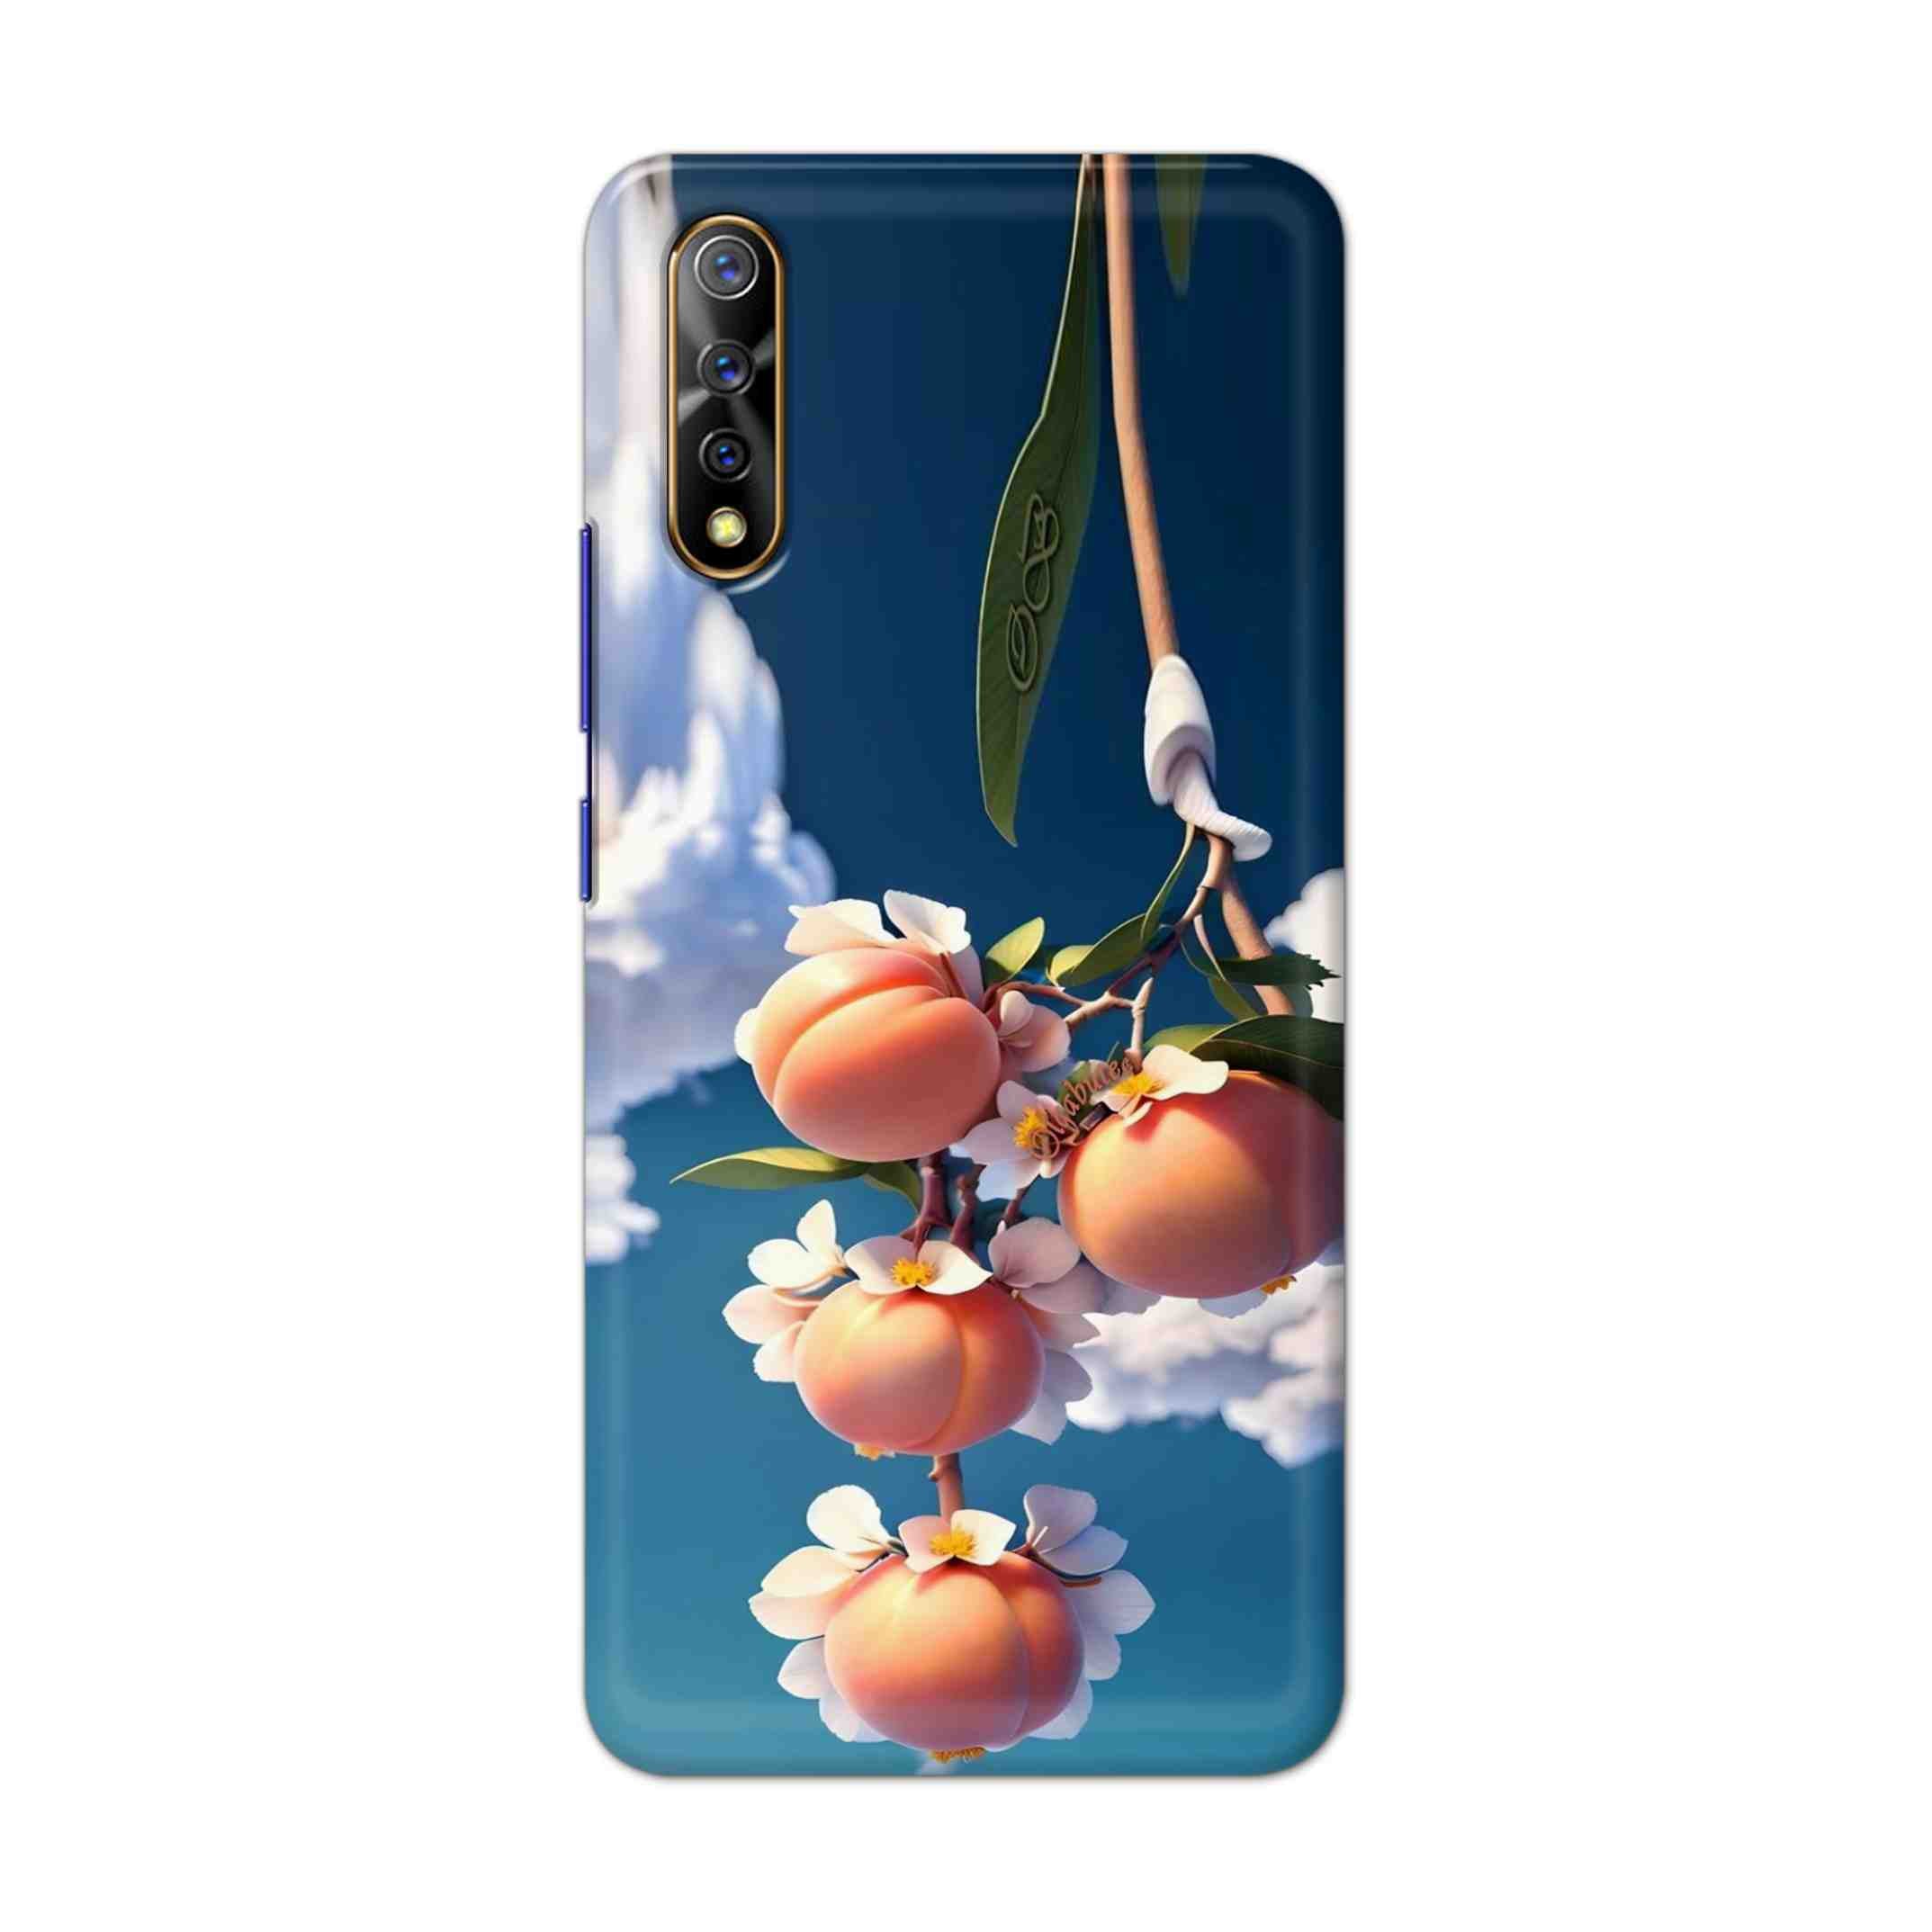 Buy Fruit Hard Back Mobile Phone Case Cover For Vivo S1 / Z1x Online